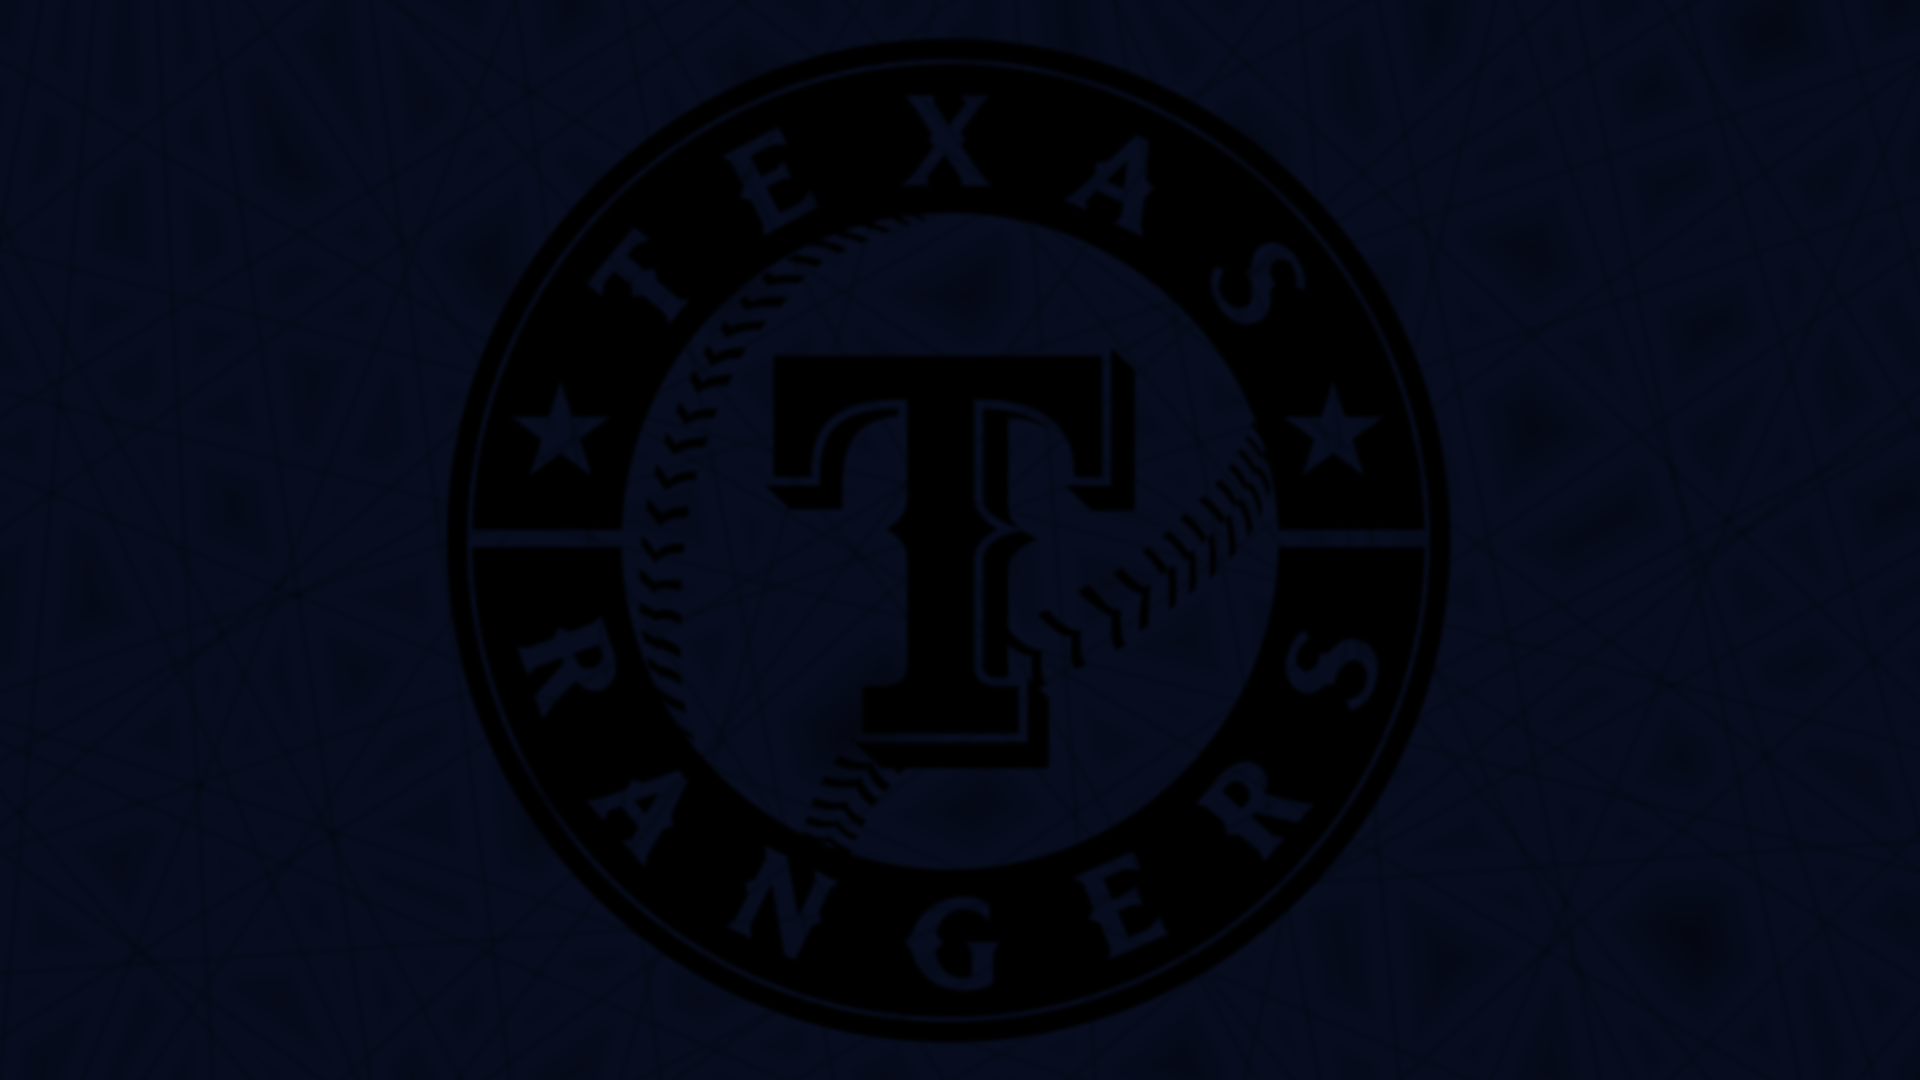 Texas Ranger Wallpaper images